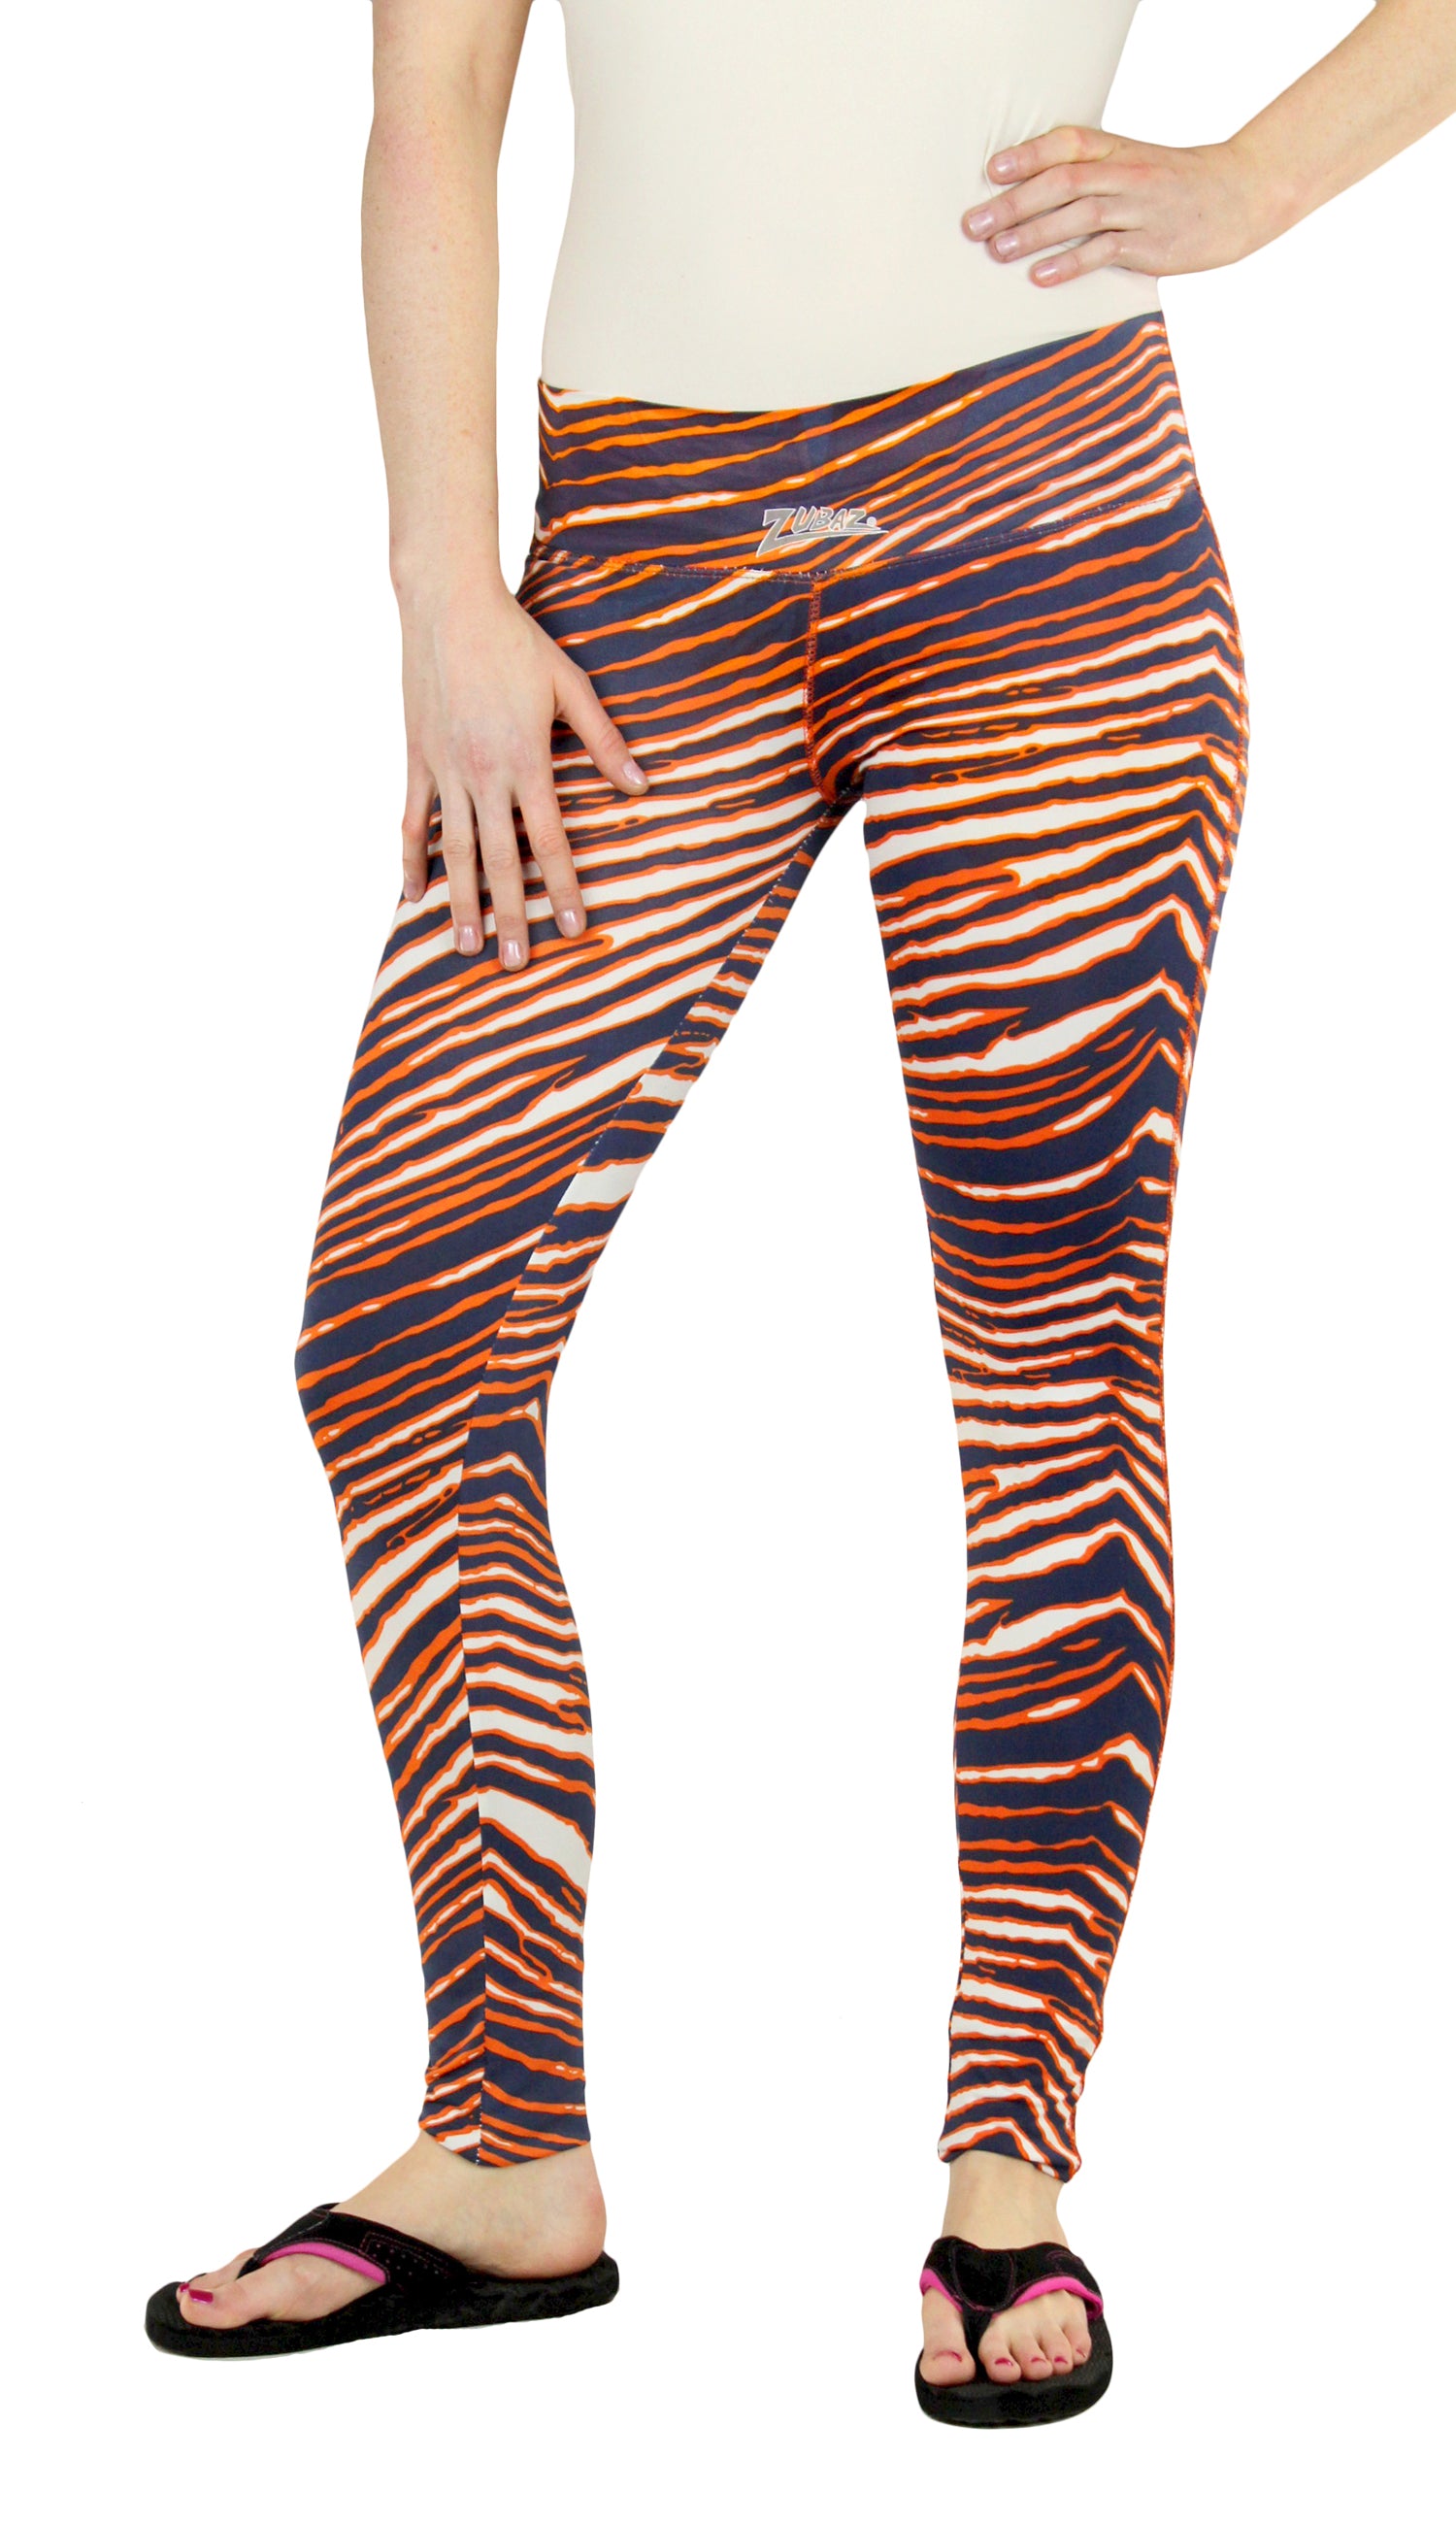 Half Zebra Urban Jungle Leggings  Zebra print leggings, Zebra leggings,  Dressy fashion